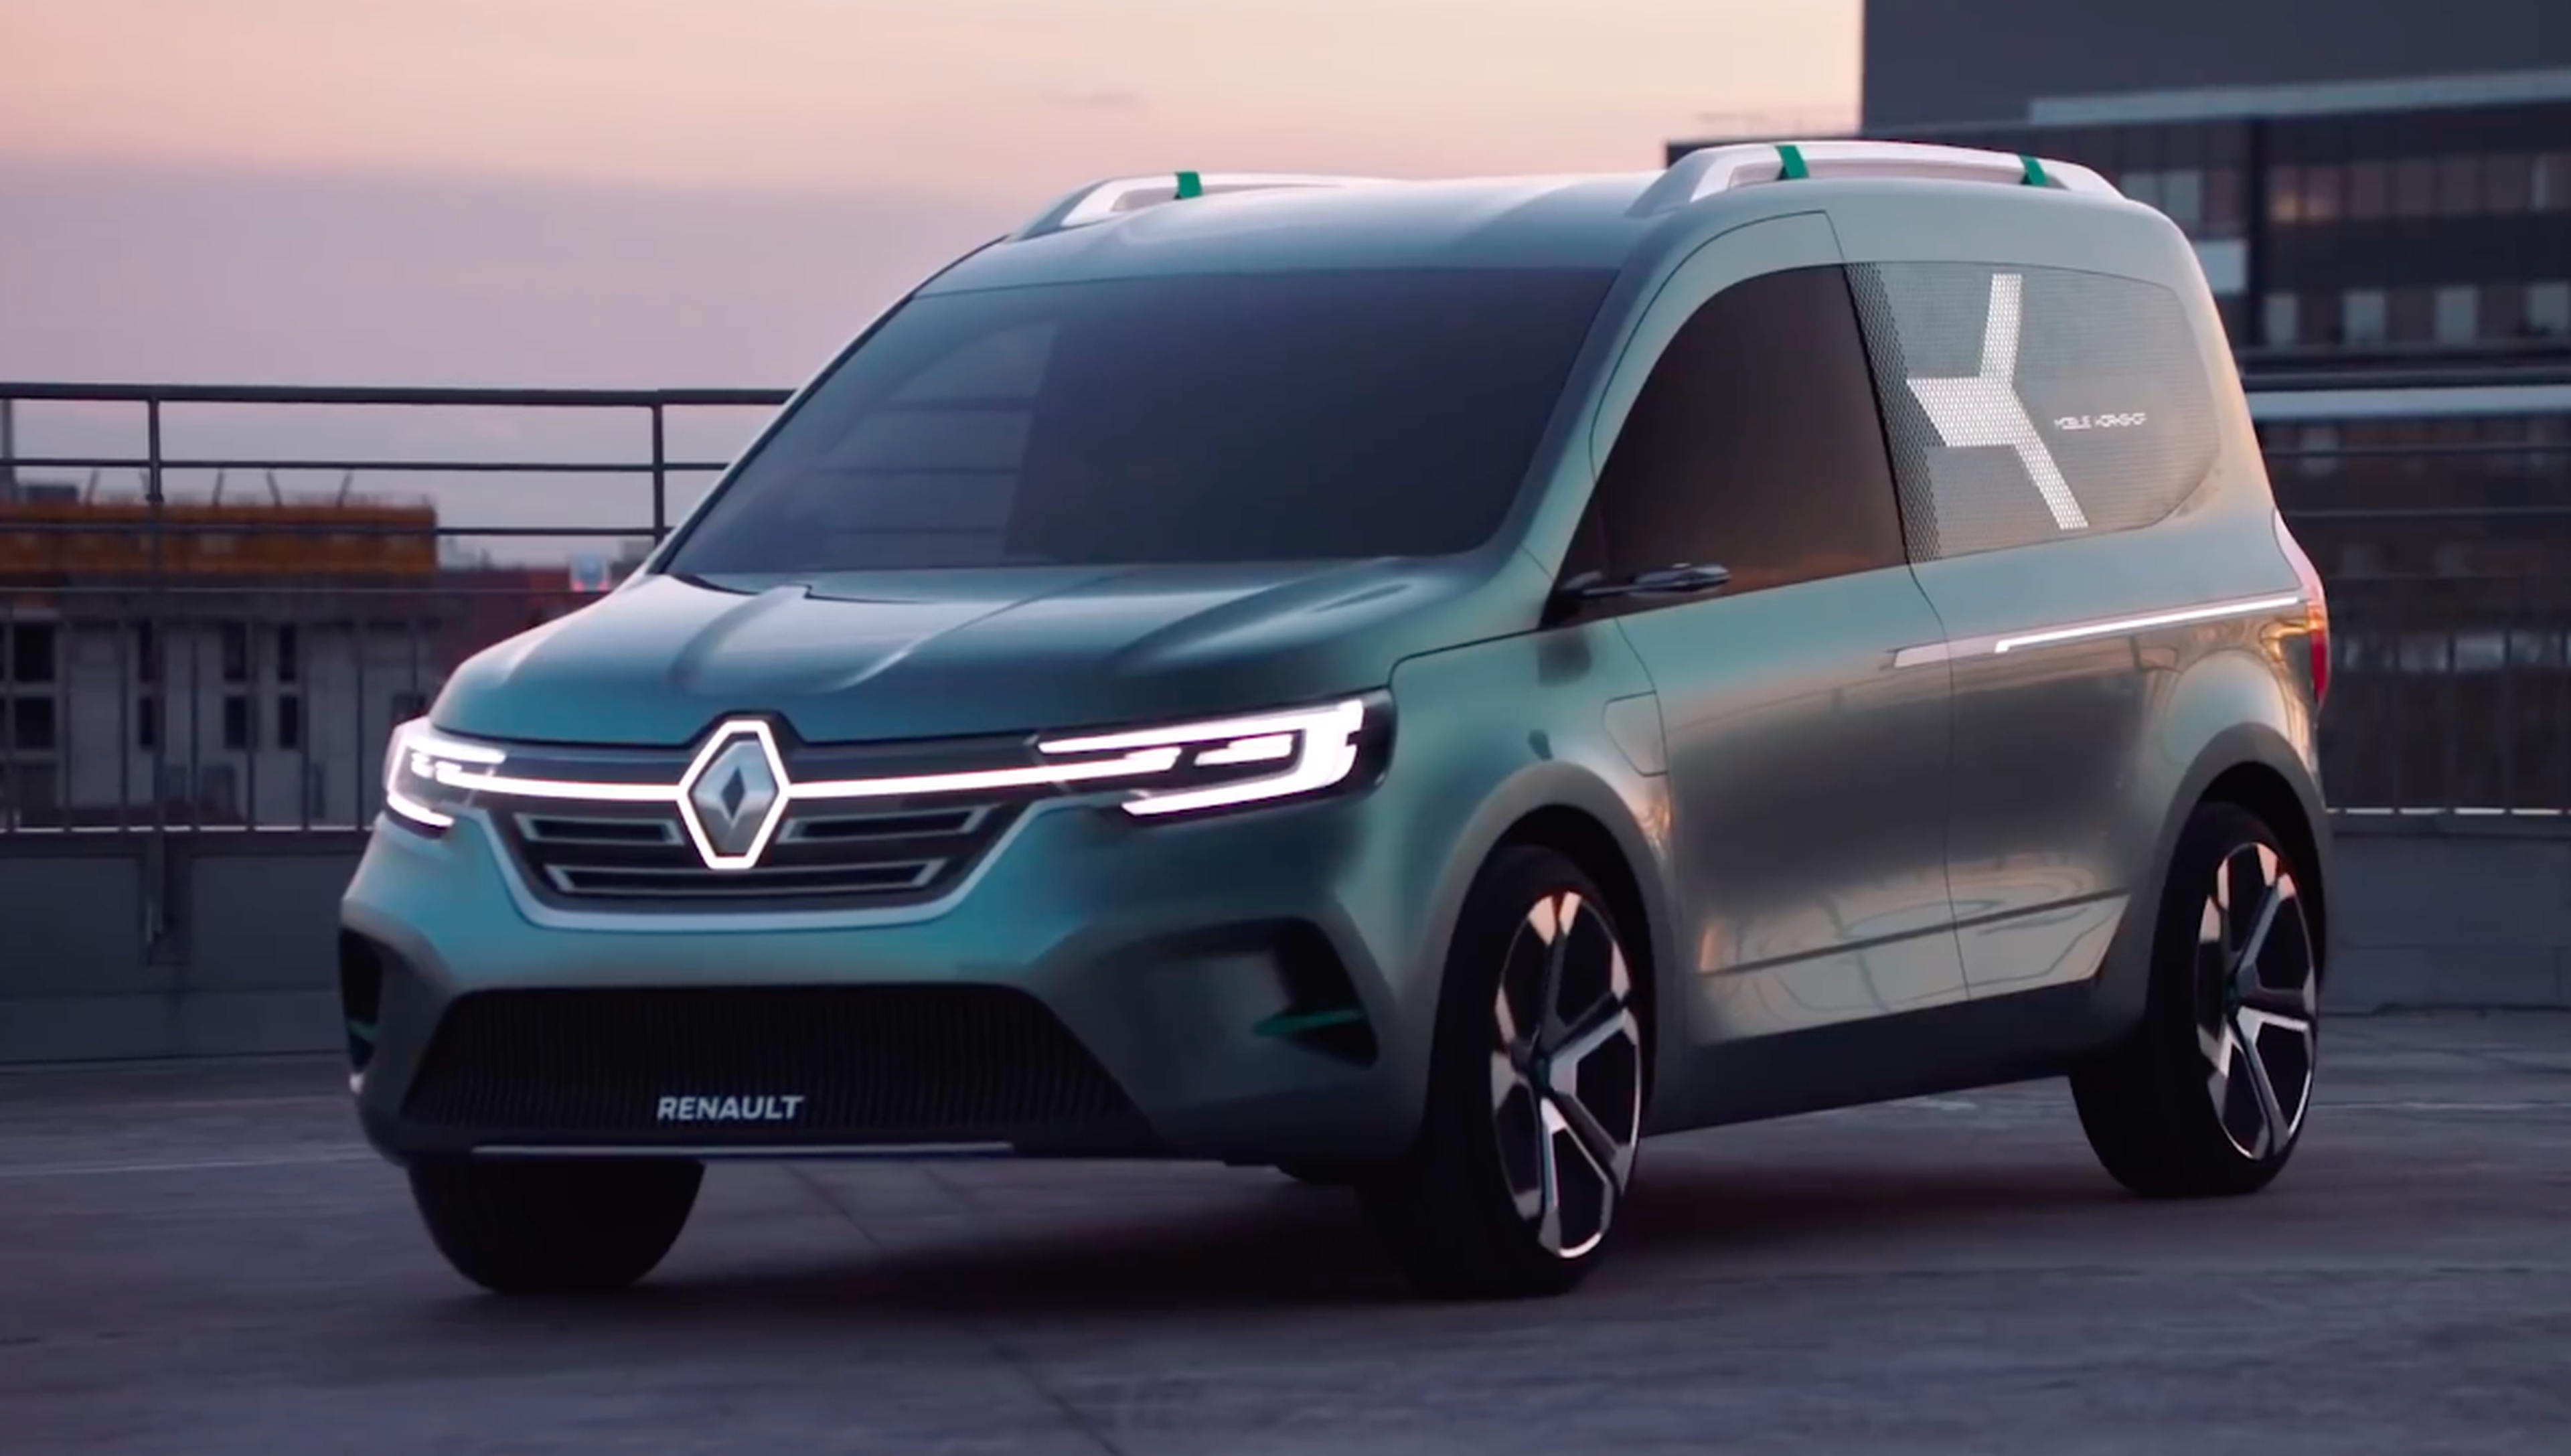 VÍDEO: Renault KANGOO Z.E. Concept, así se imagina la futura furgoneta